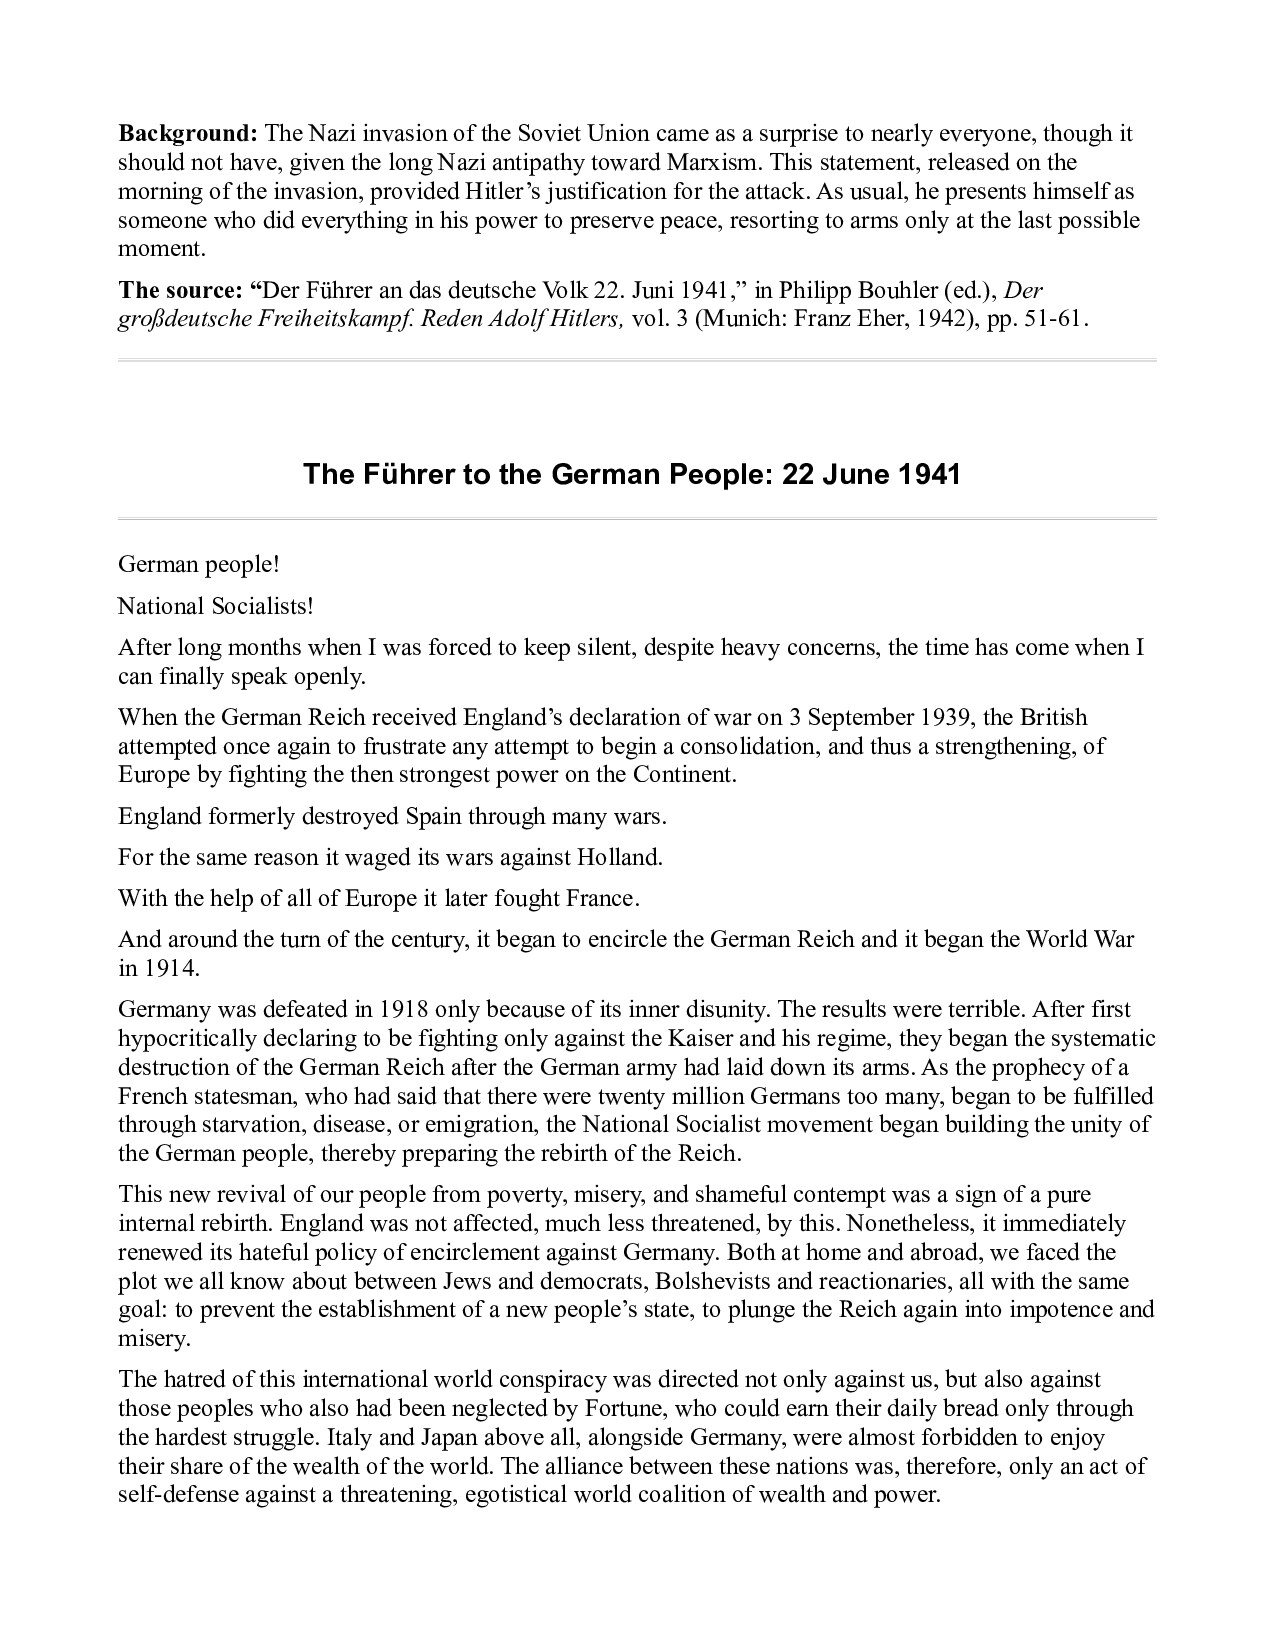 The Führer to the German People - 22 June 1941 - Hitler